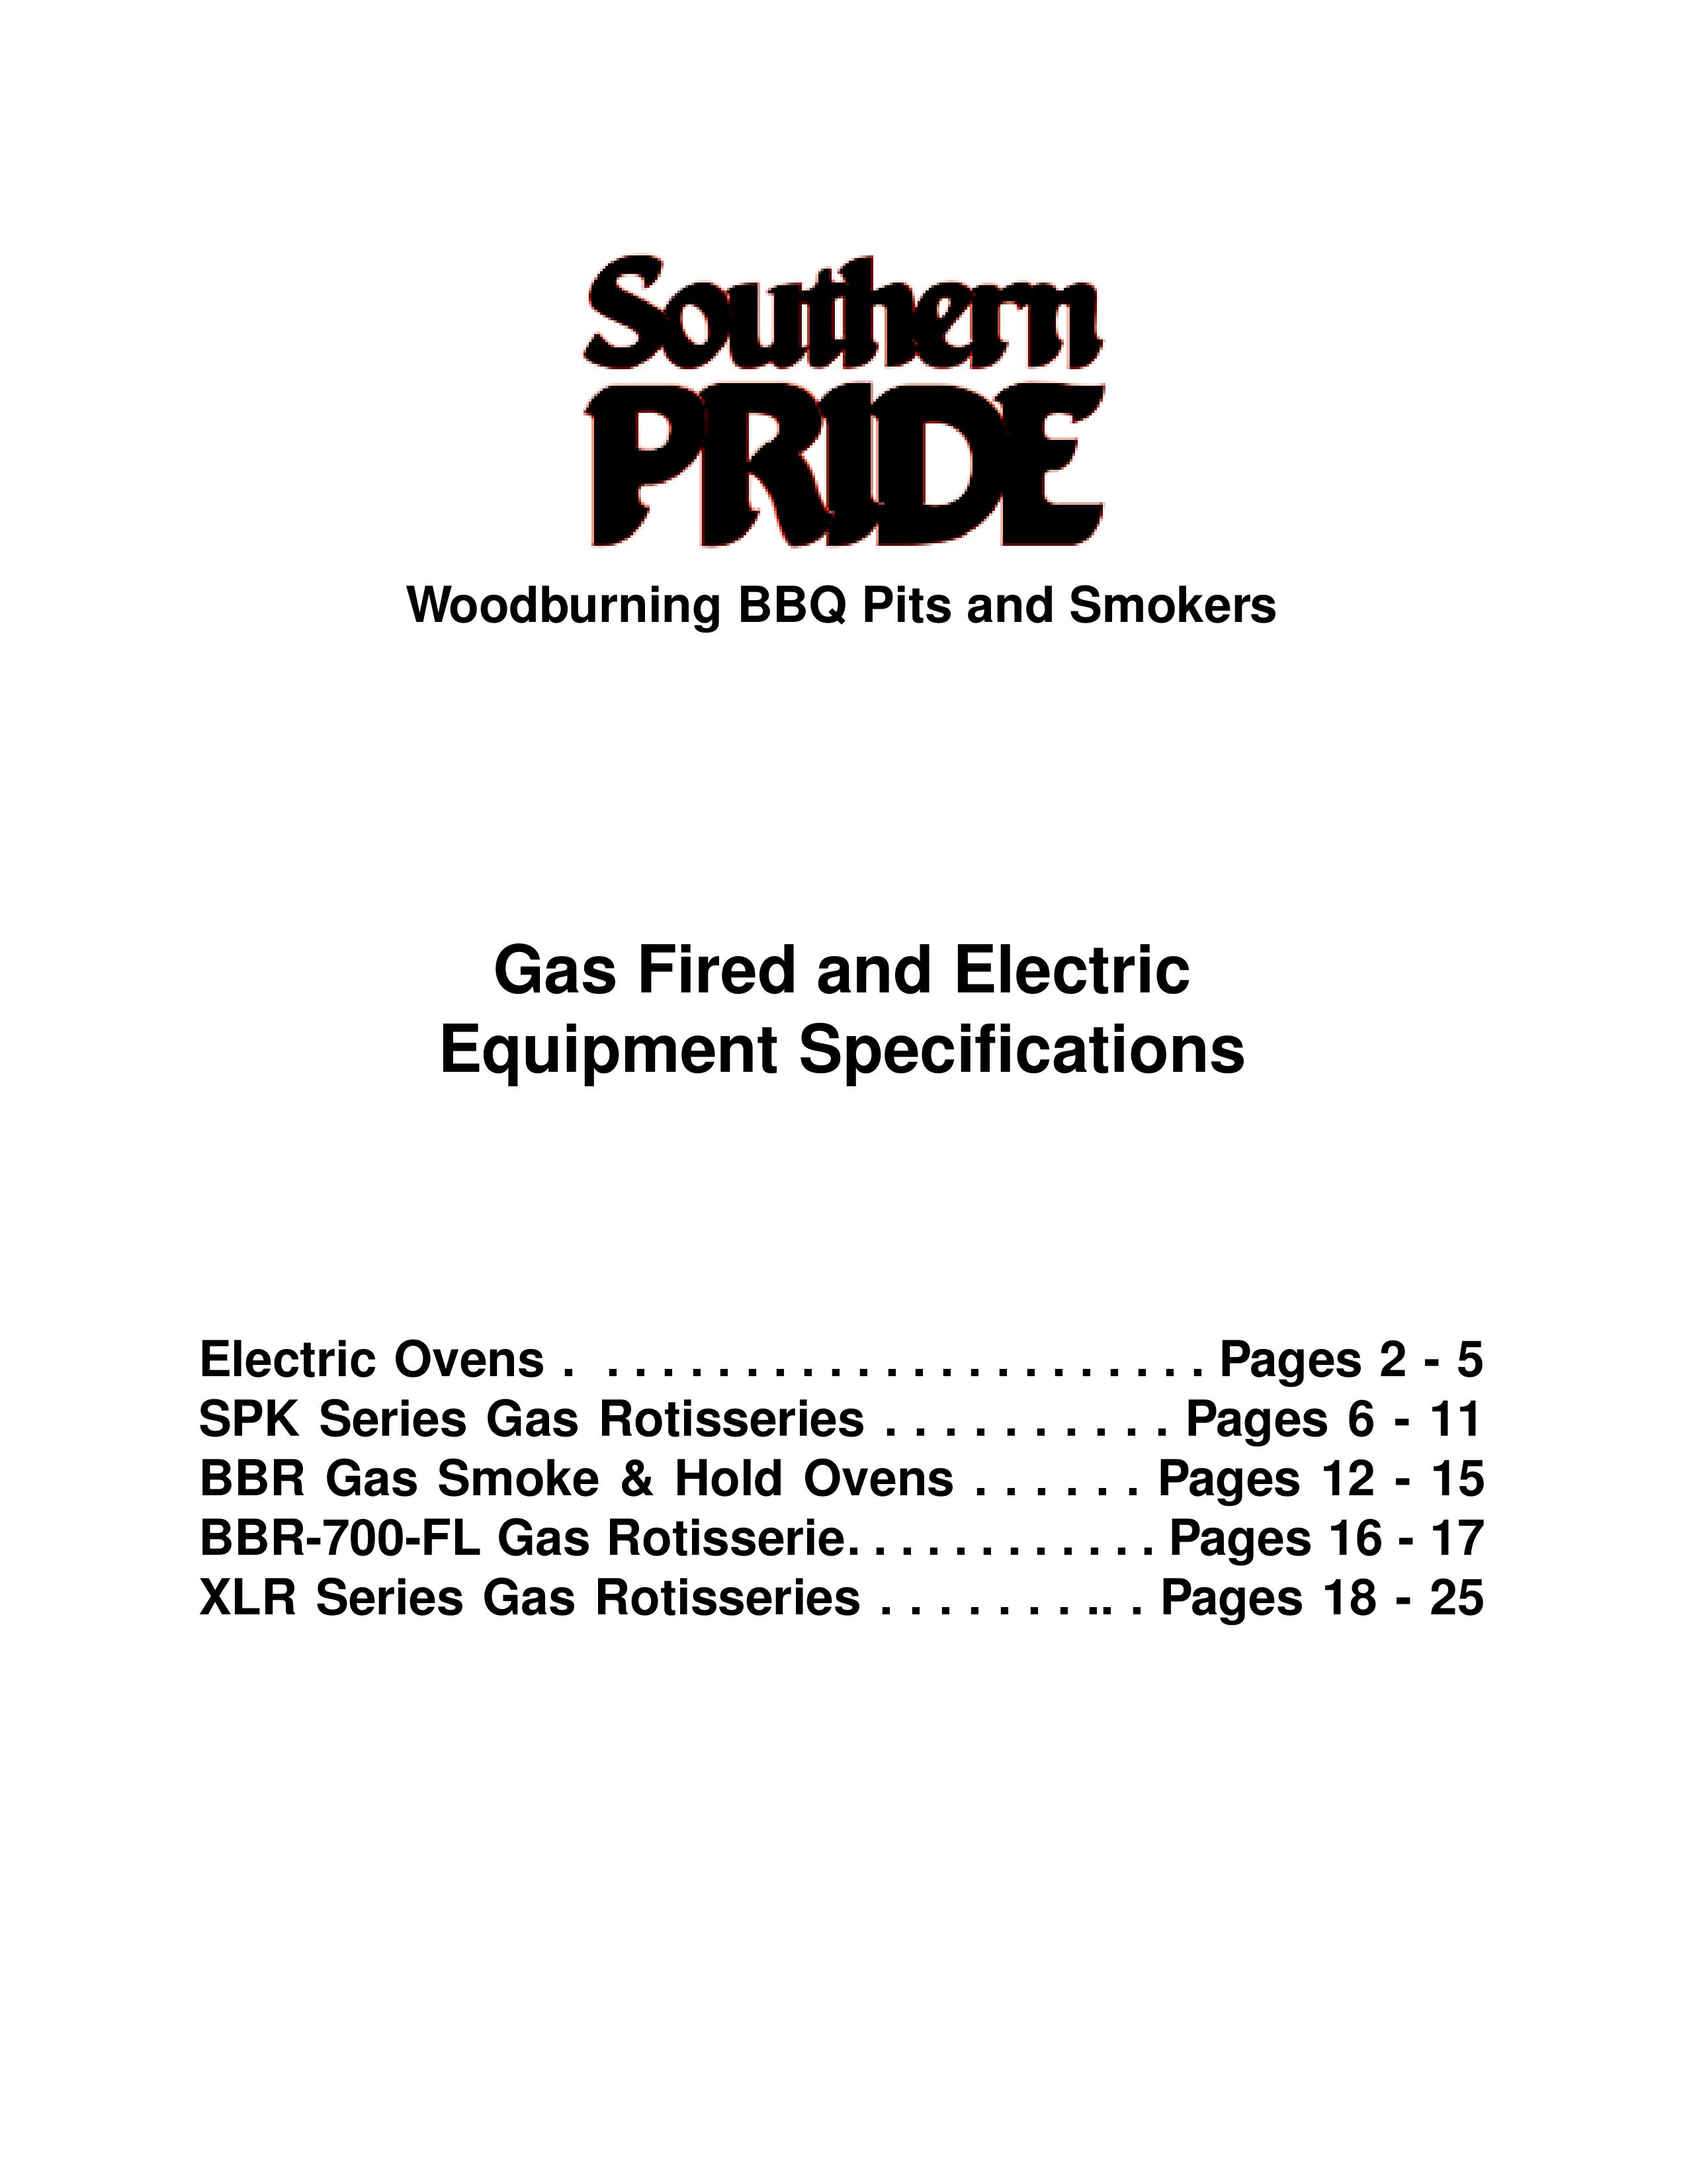 Southern Pride BBR-700-SL Smoker User Manual